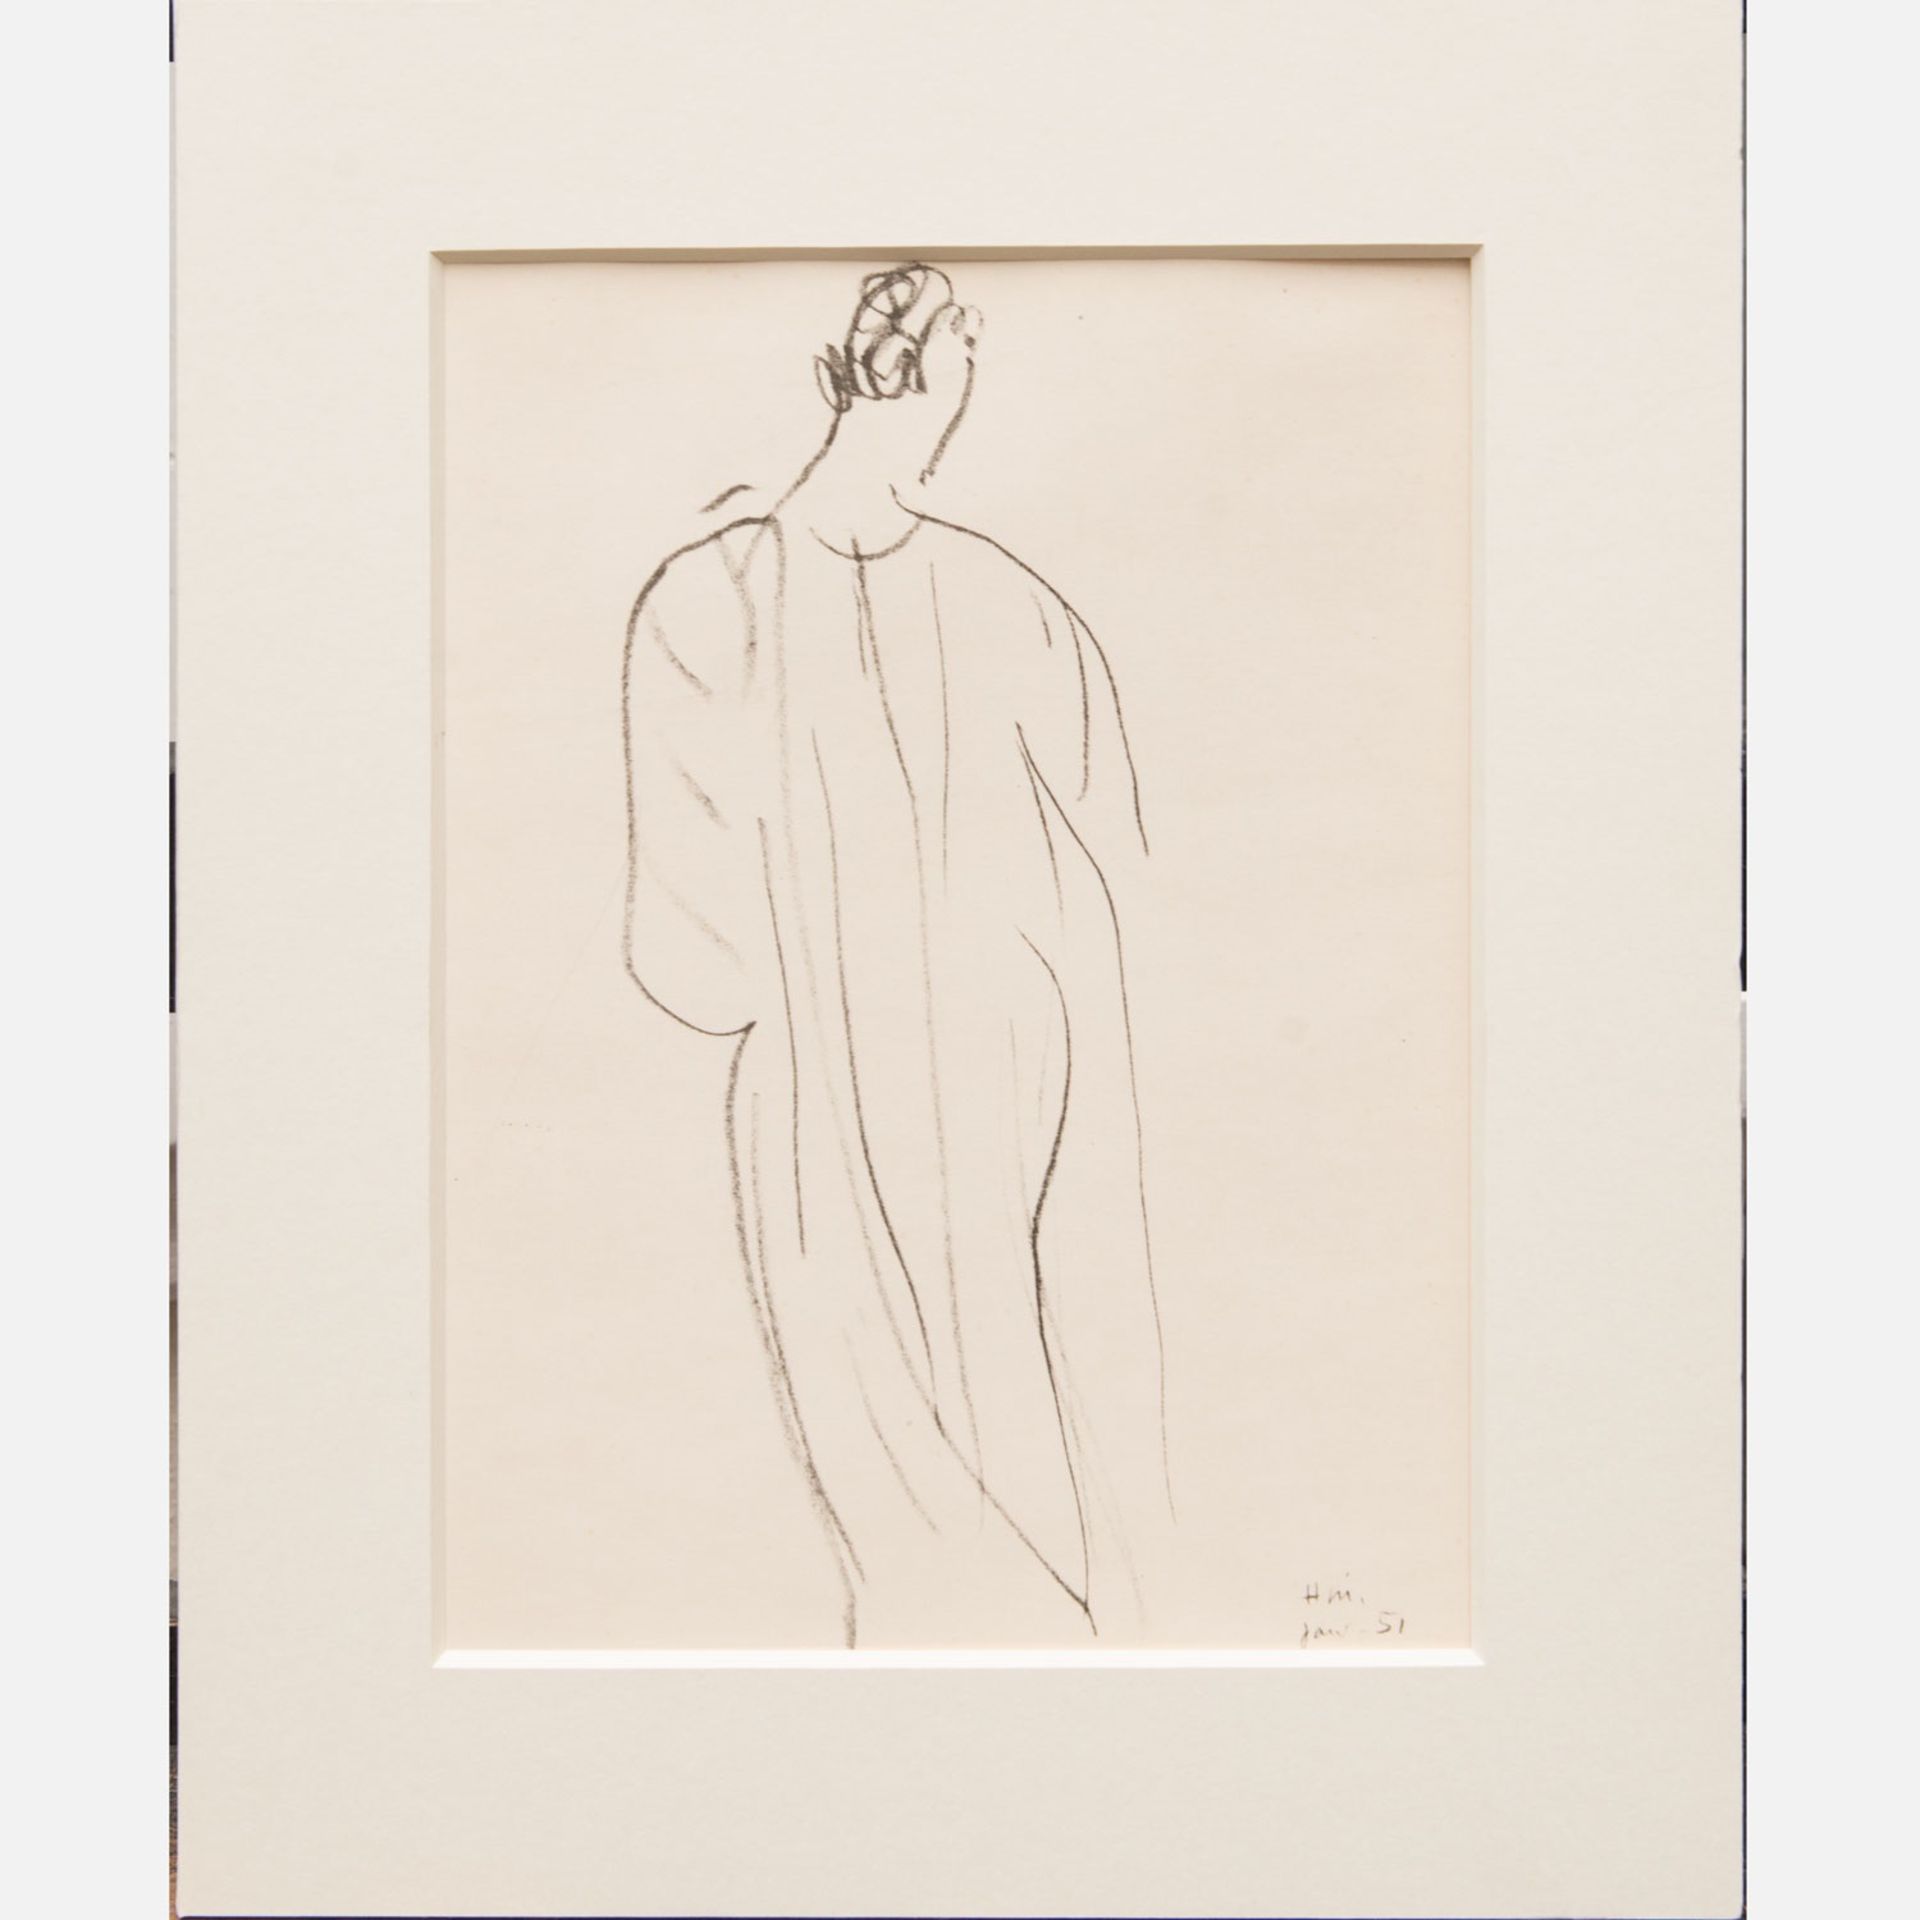 Henry Matisse (1869-1954) – Graphic